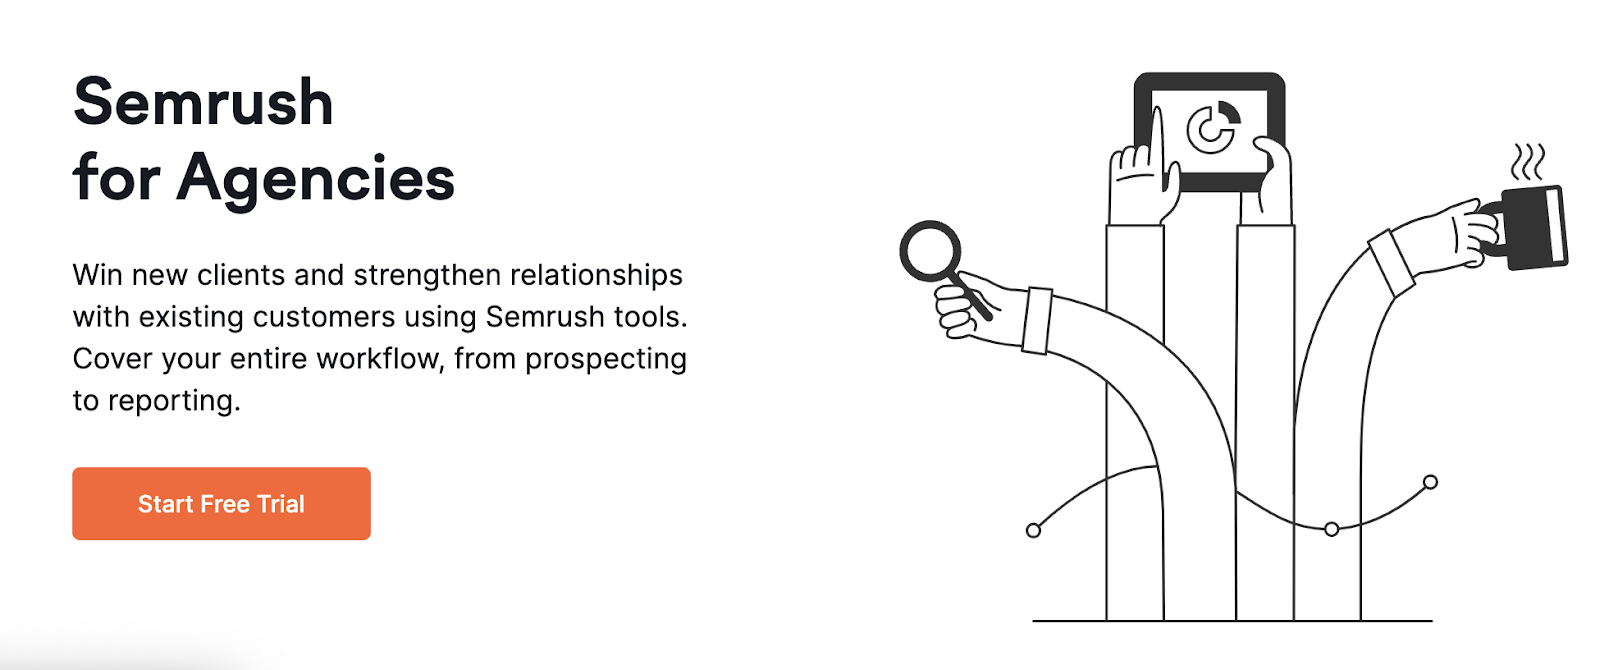 Semrush for Agencies landing page